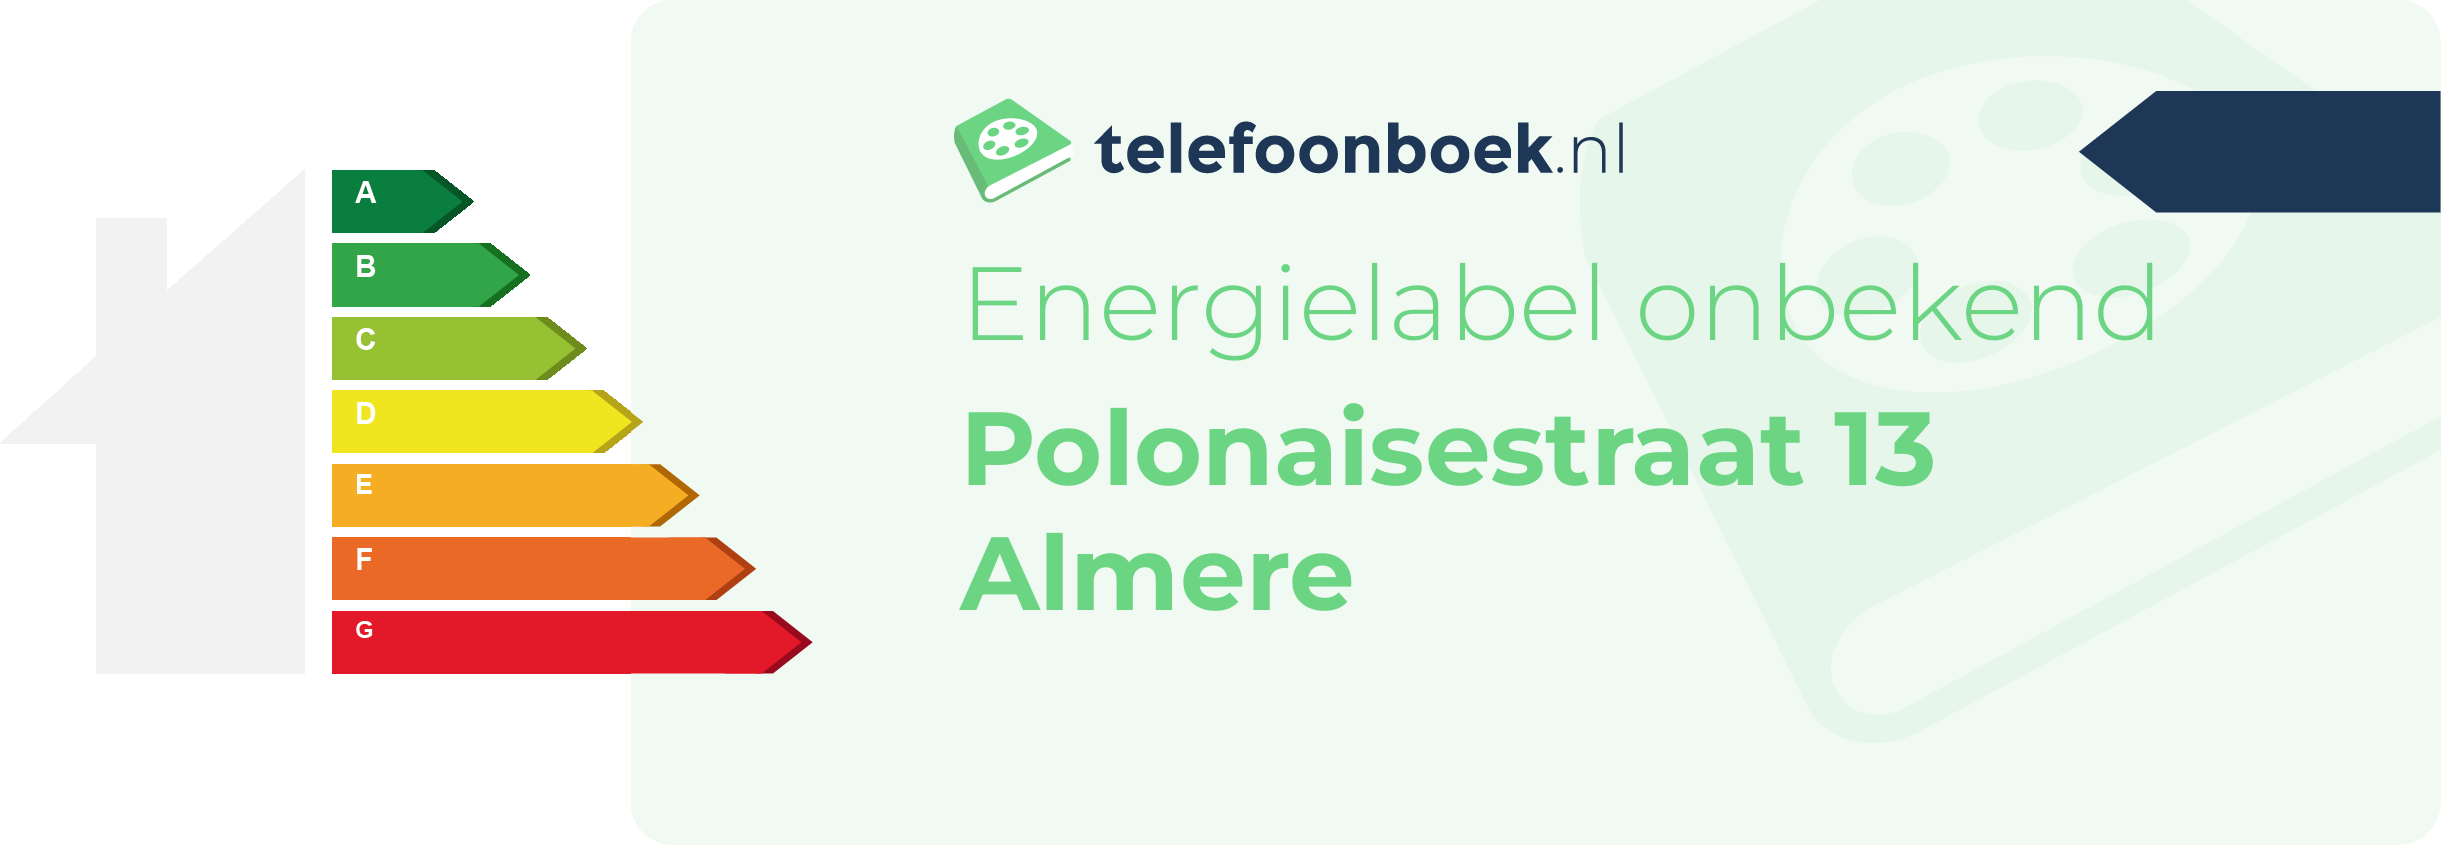 Energielabel Polonaisestraat 13 Almere